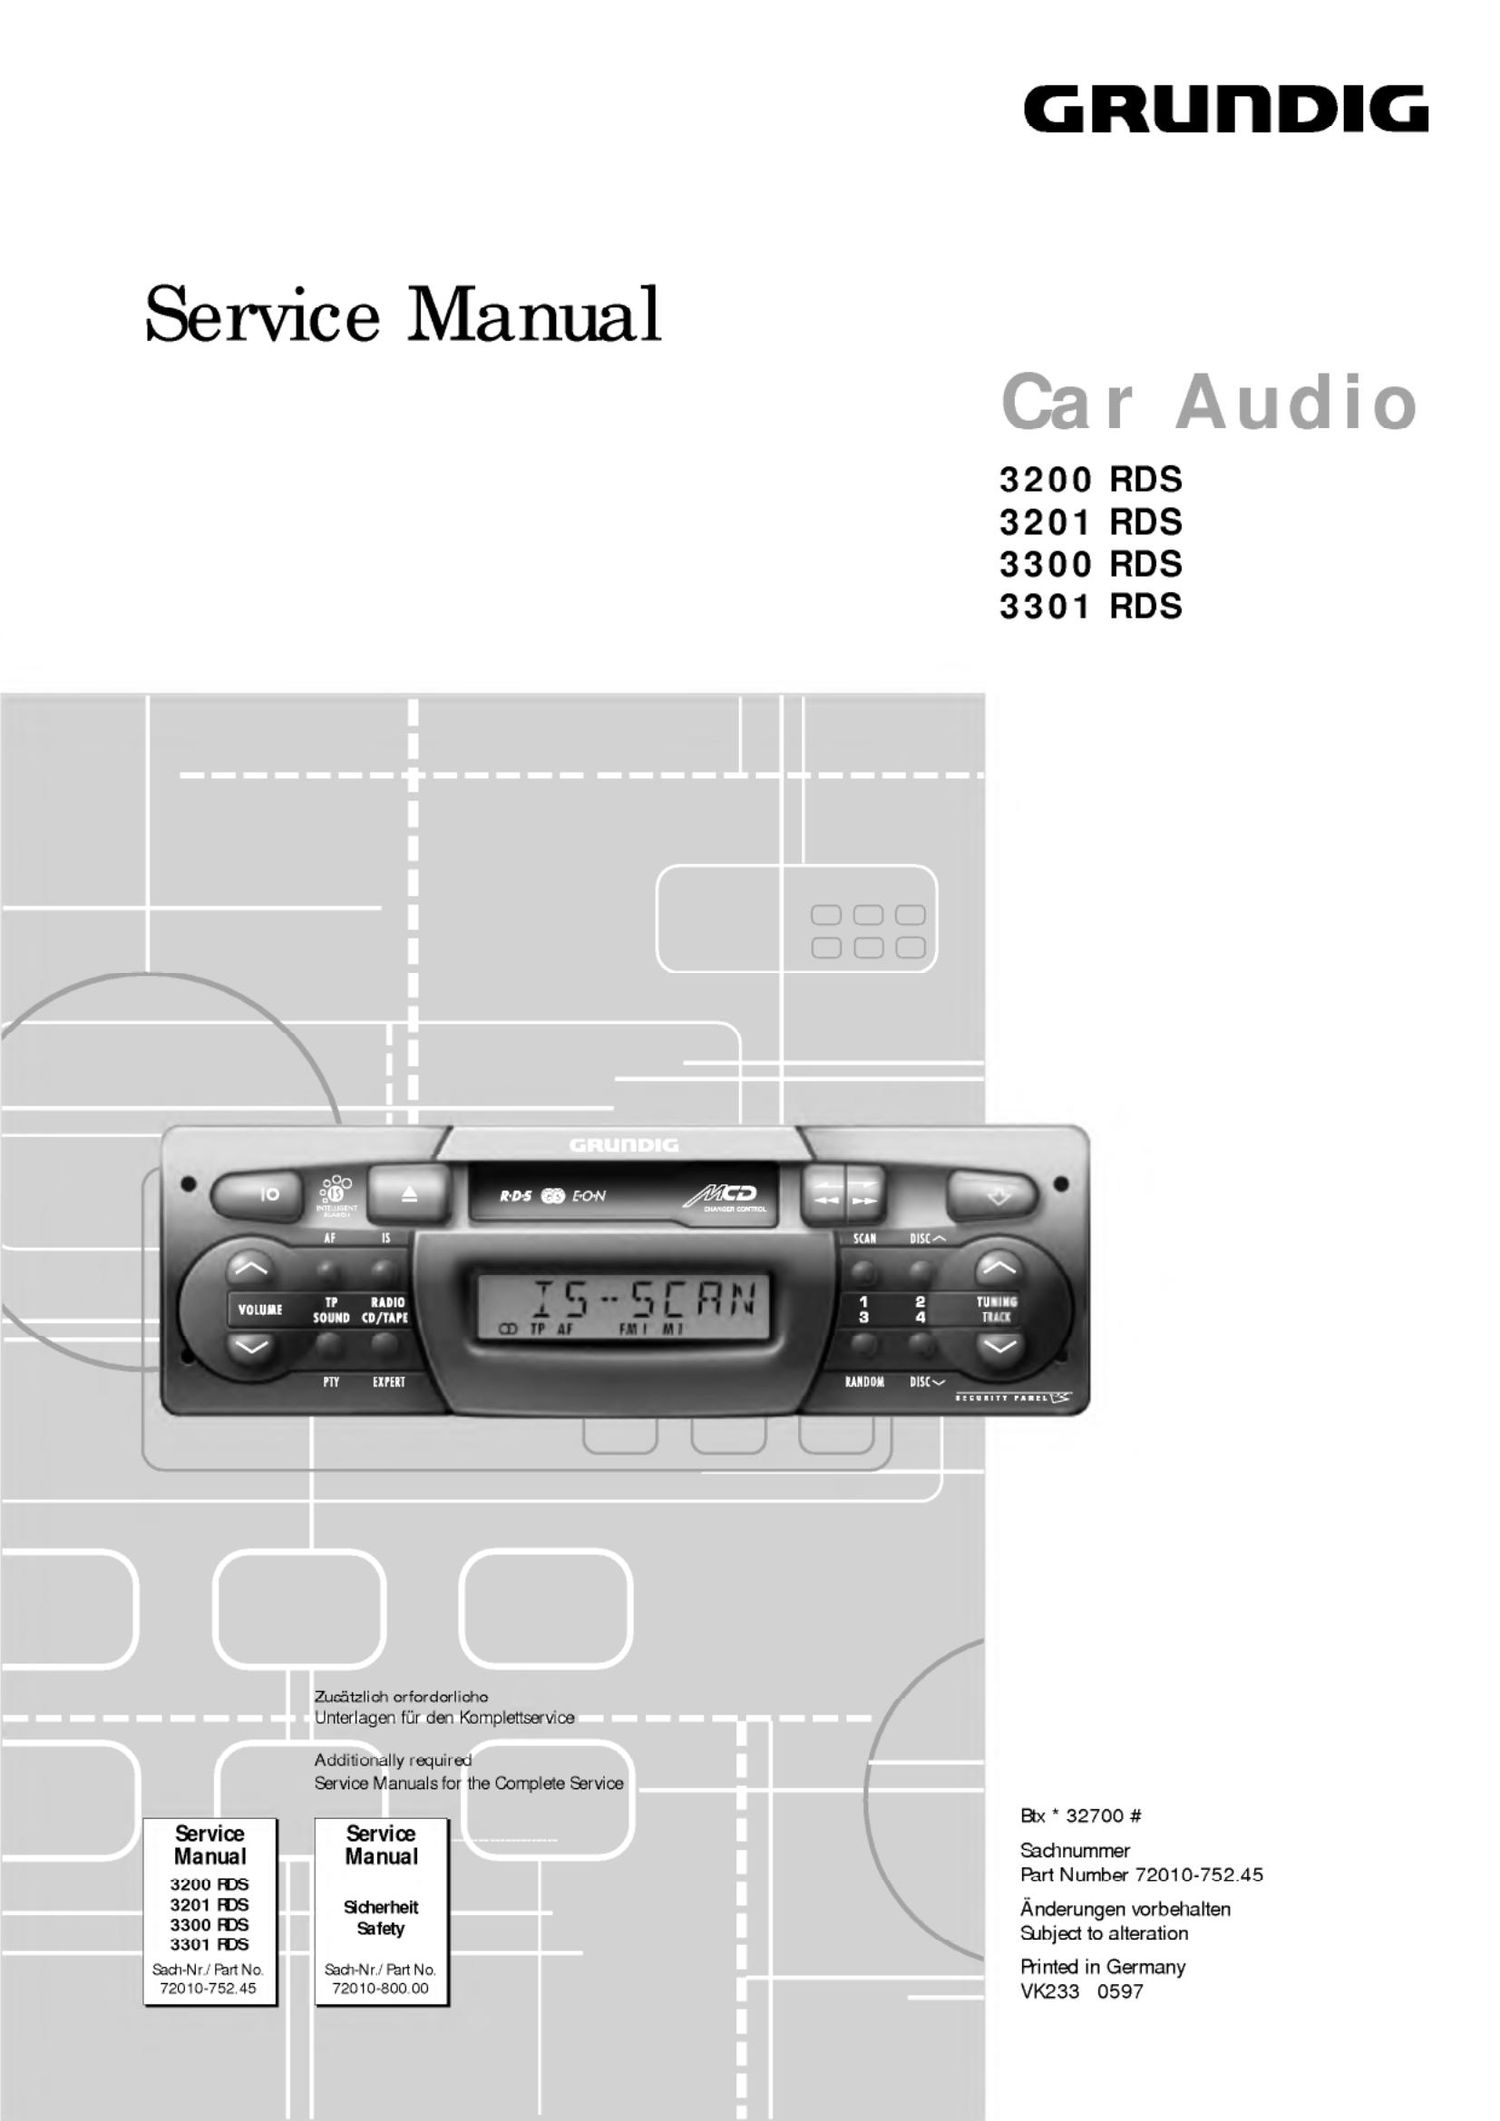 Grundig WKC 3301 RDS Service Manual